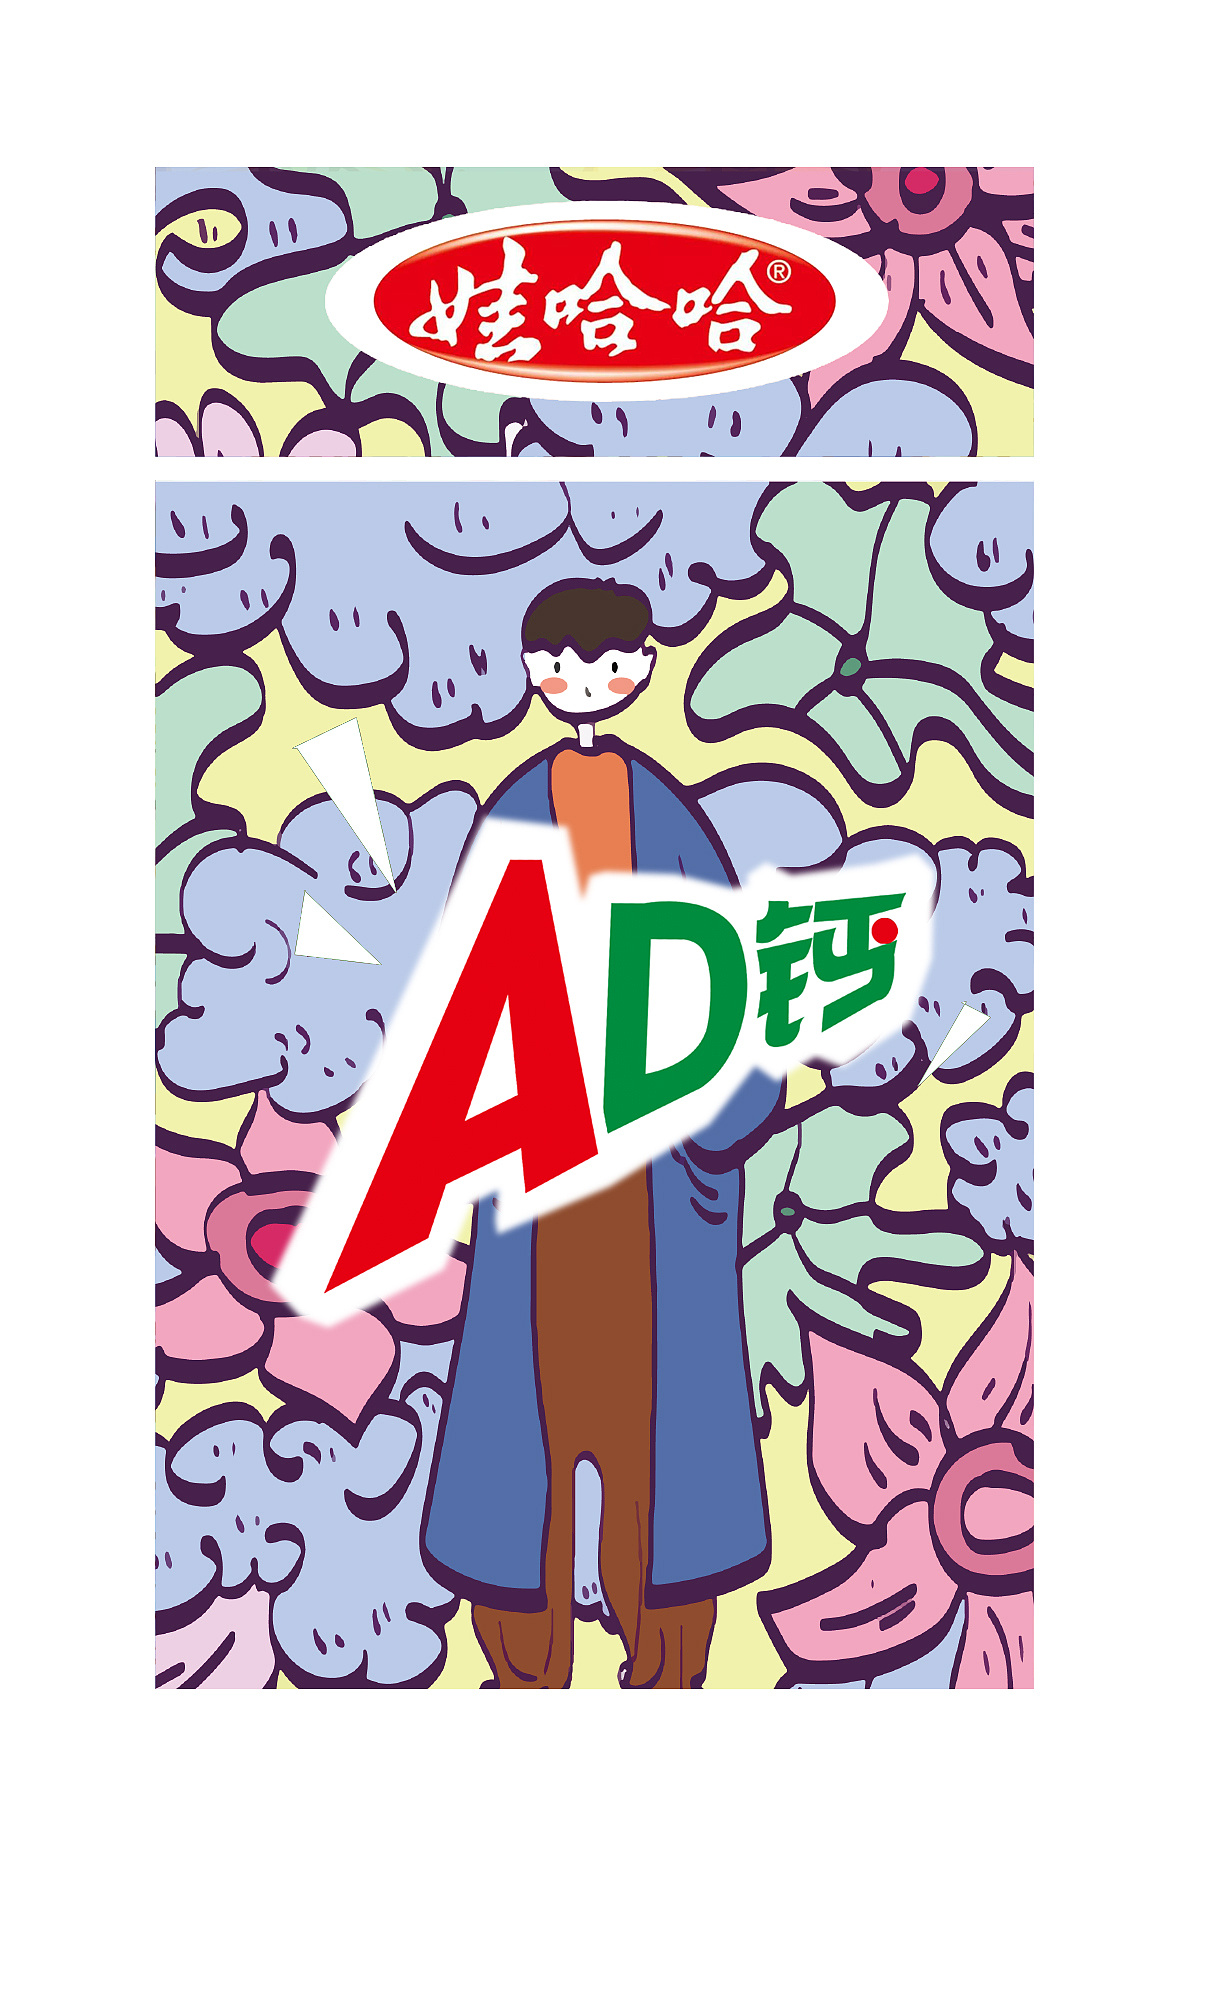 ad钙奶的插画包装升级,与时俱进